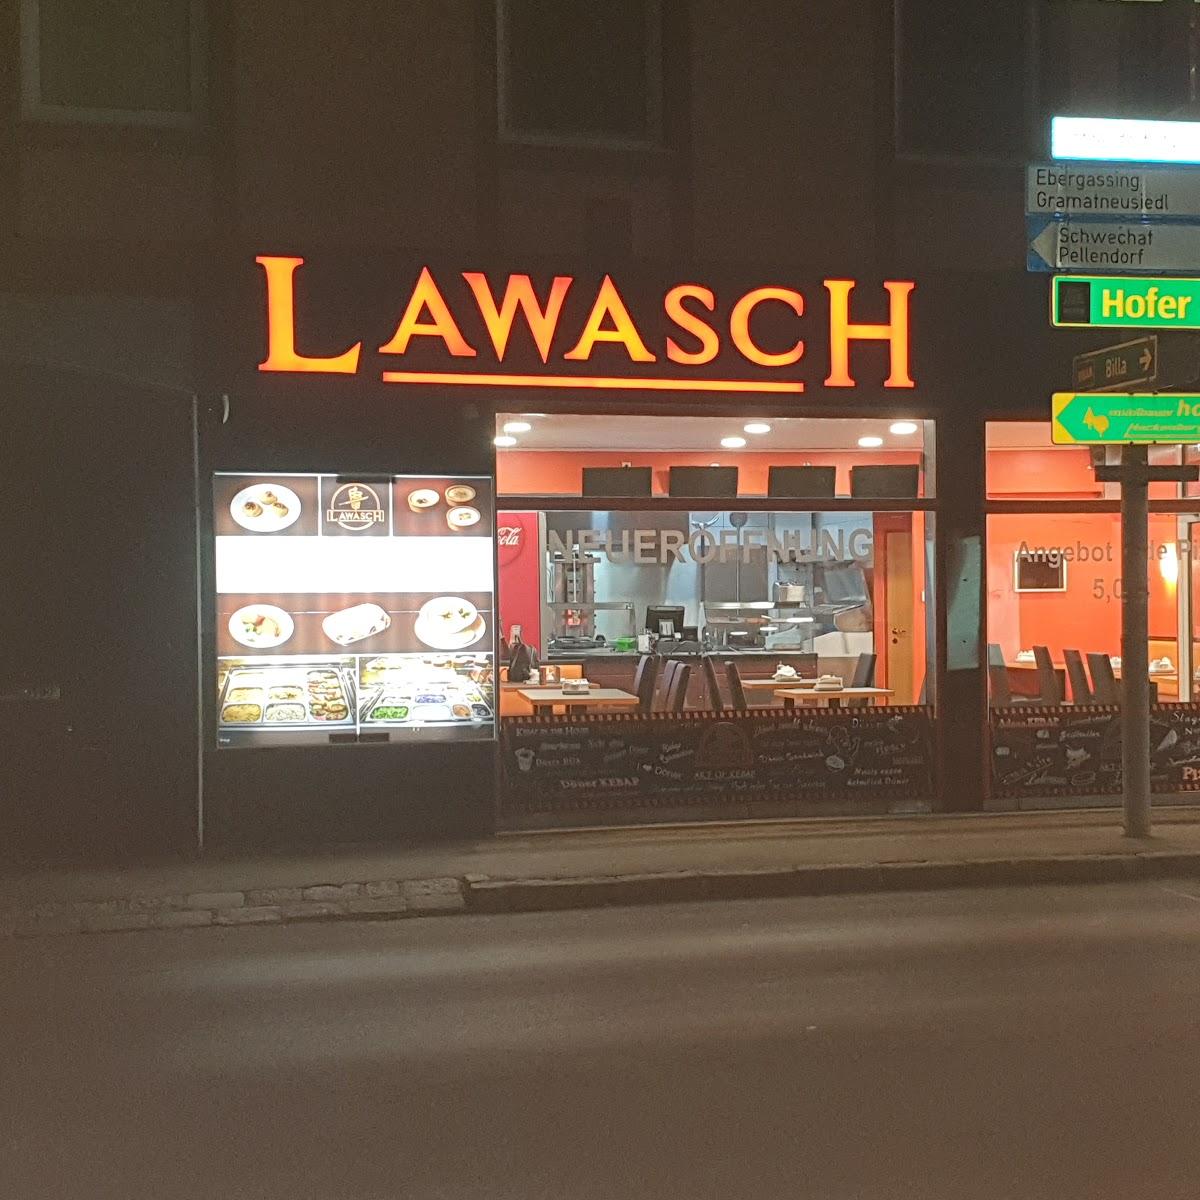 Restaurant "Lawasch" in Himberg bei Wien